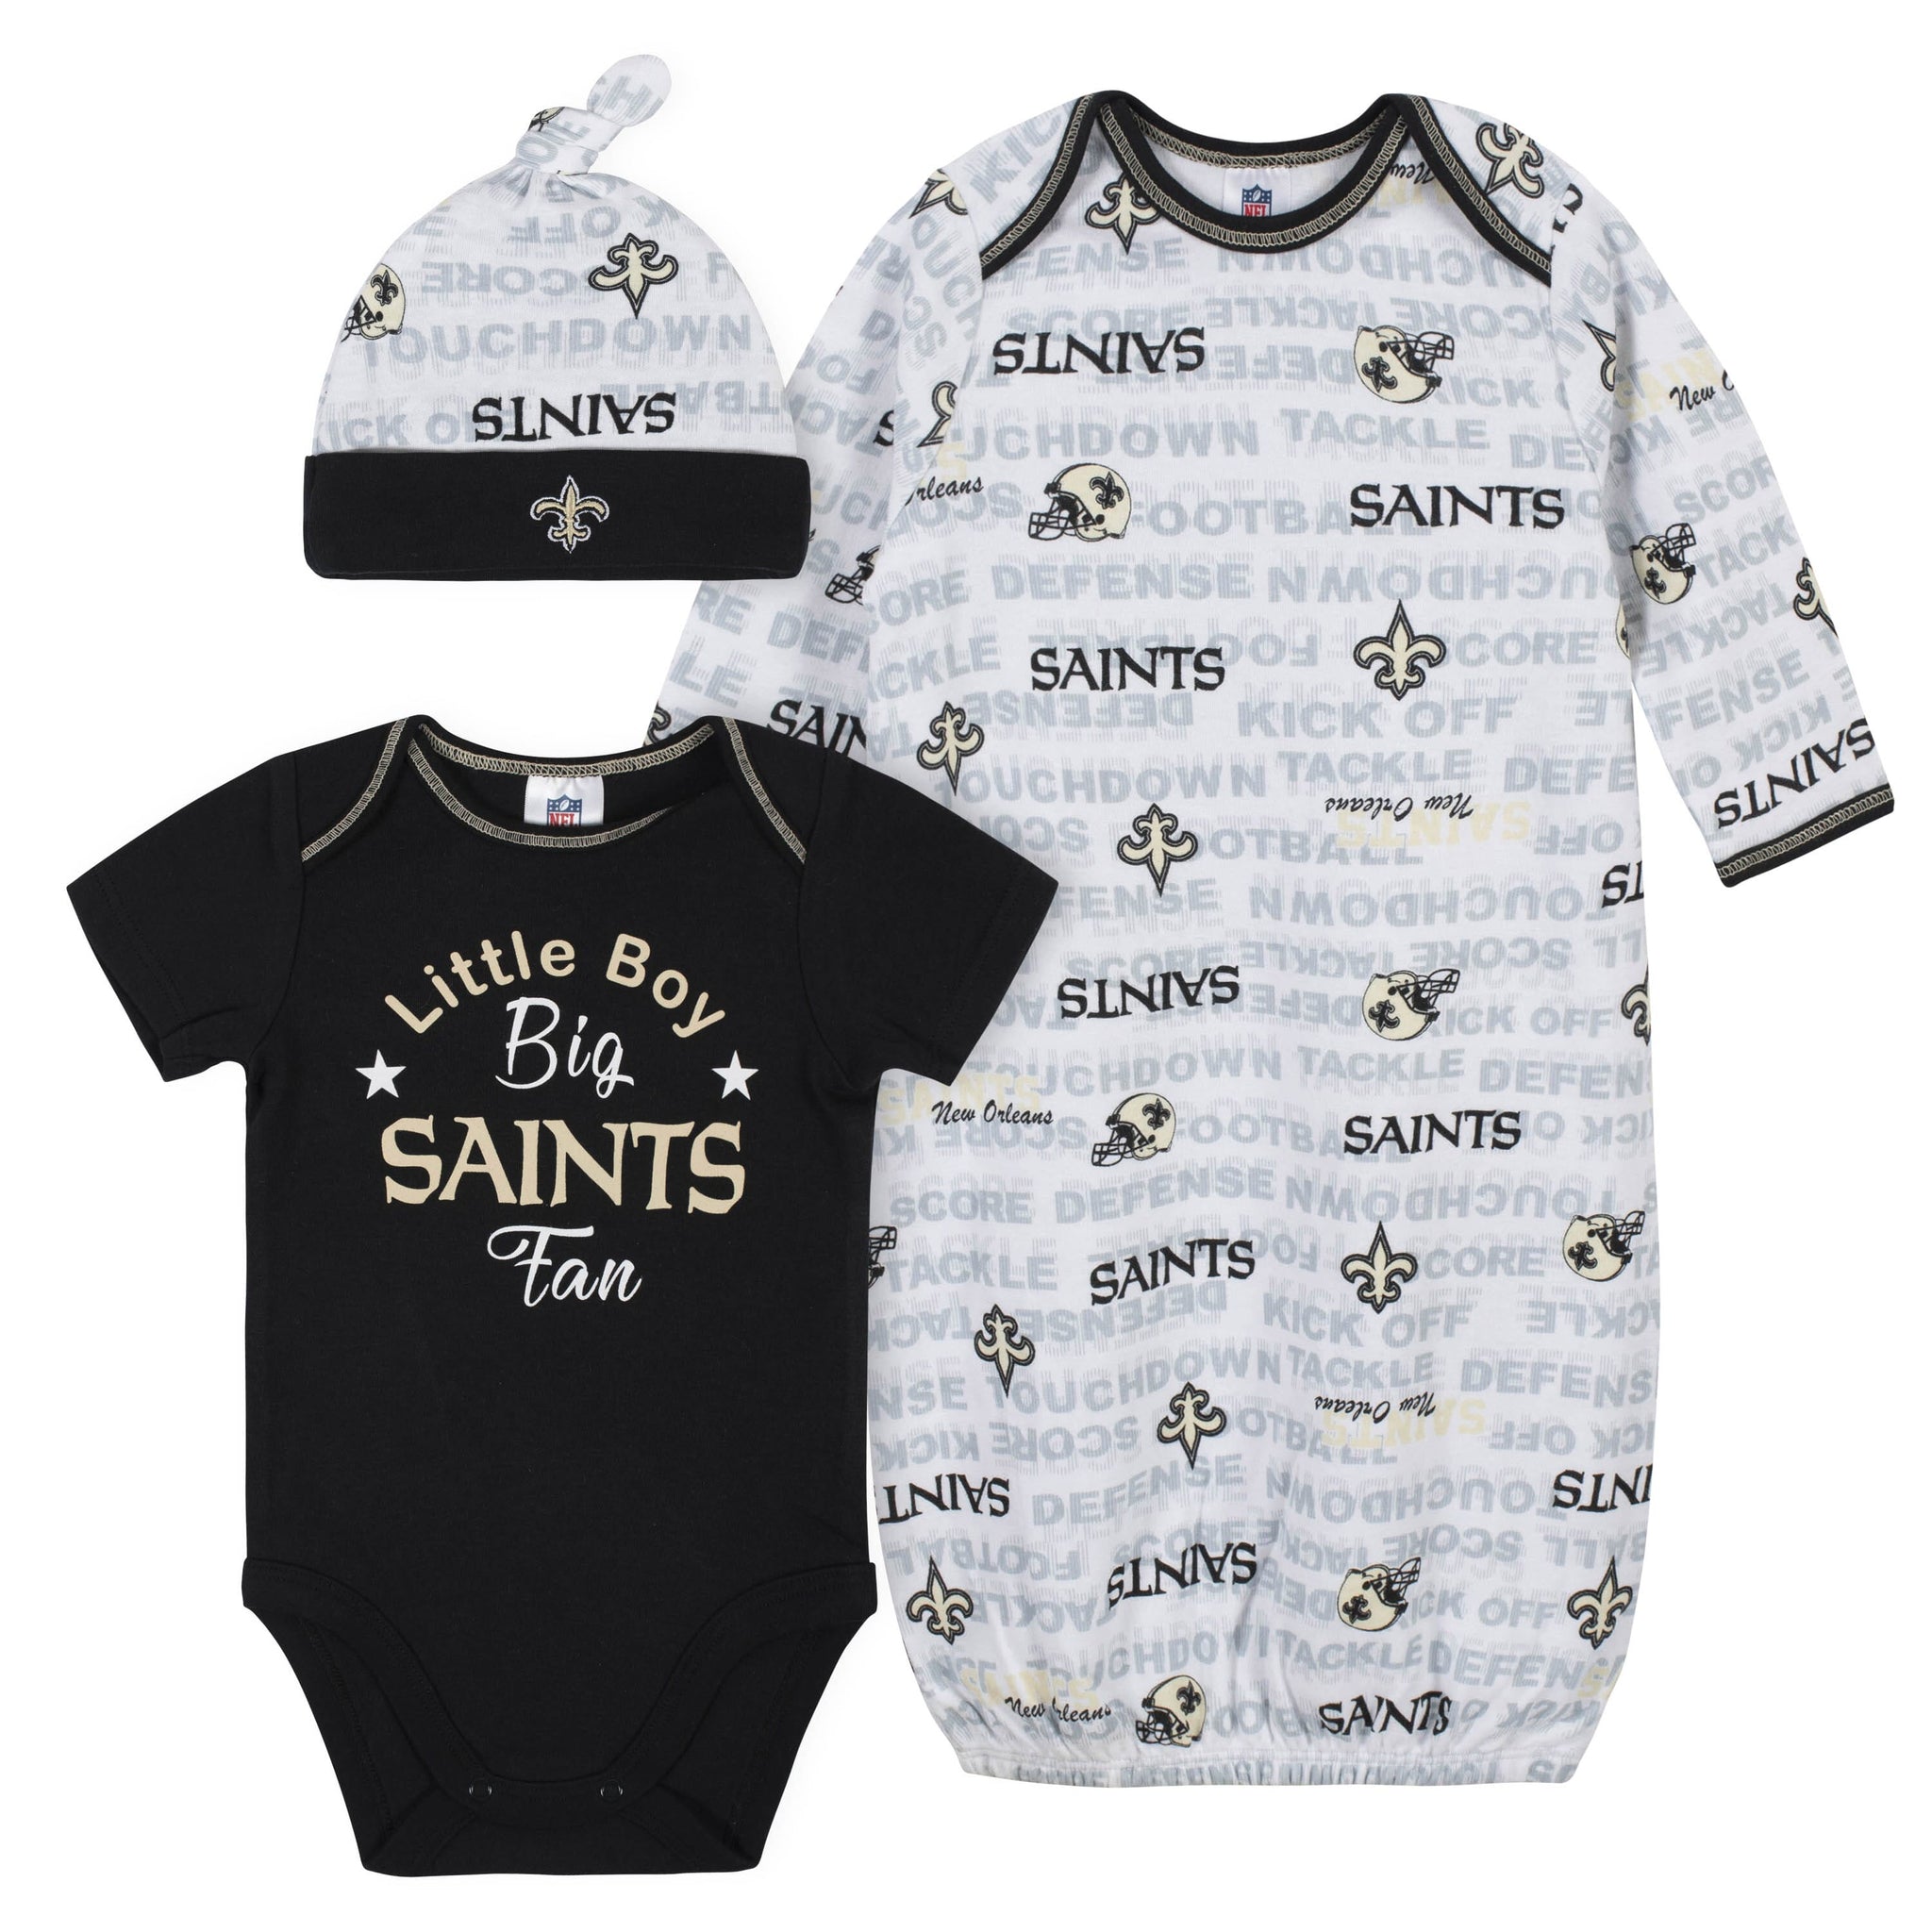 saints shirts for girls